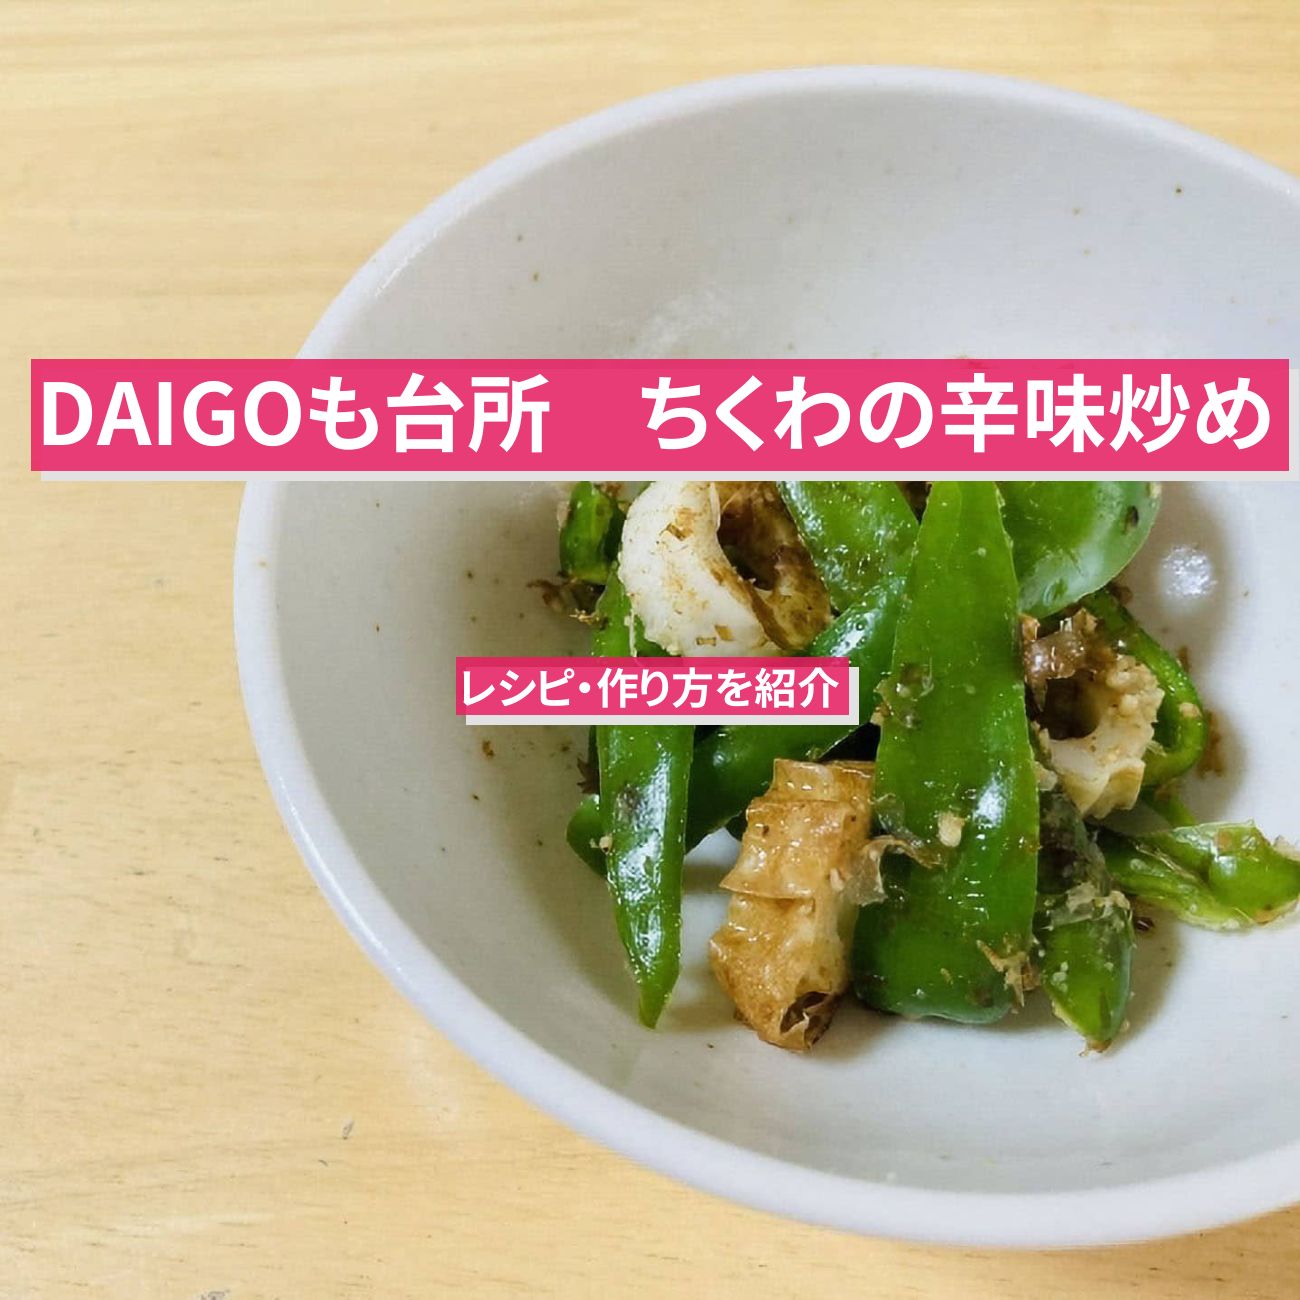 【DAIGOも台所】『ちくわの辛味炒め』のレシピ・作り方を紹介〔ダイゴも台所〕